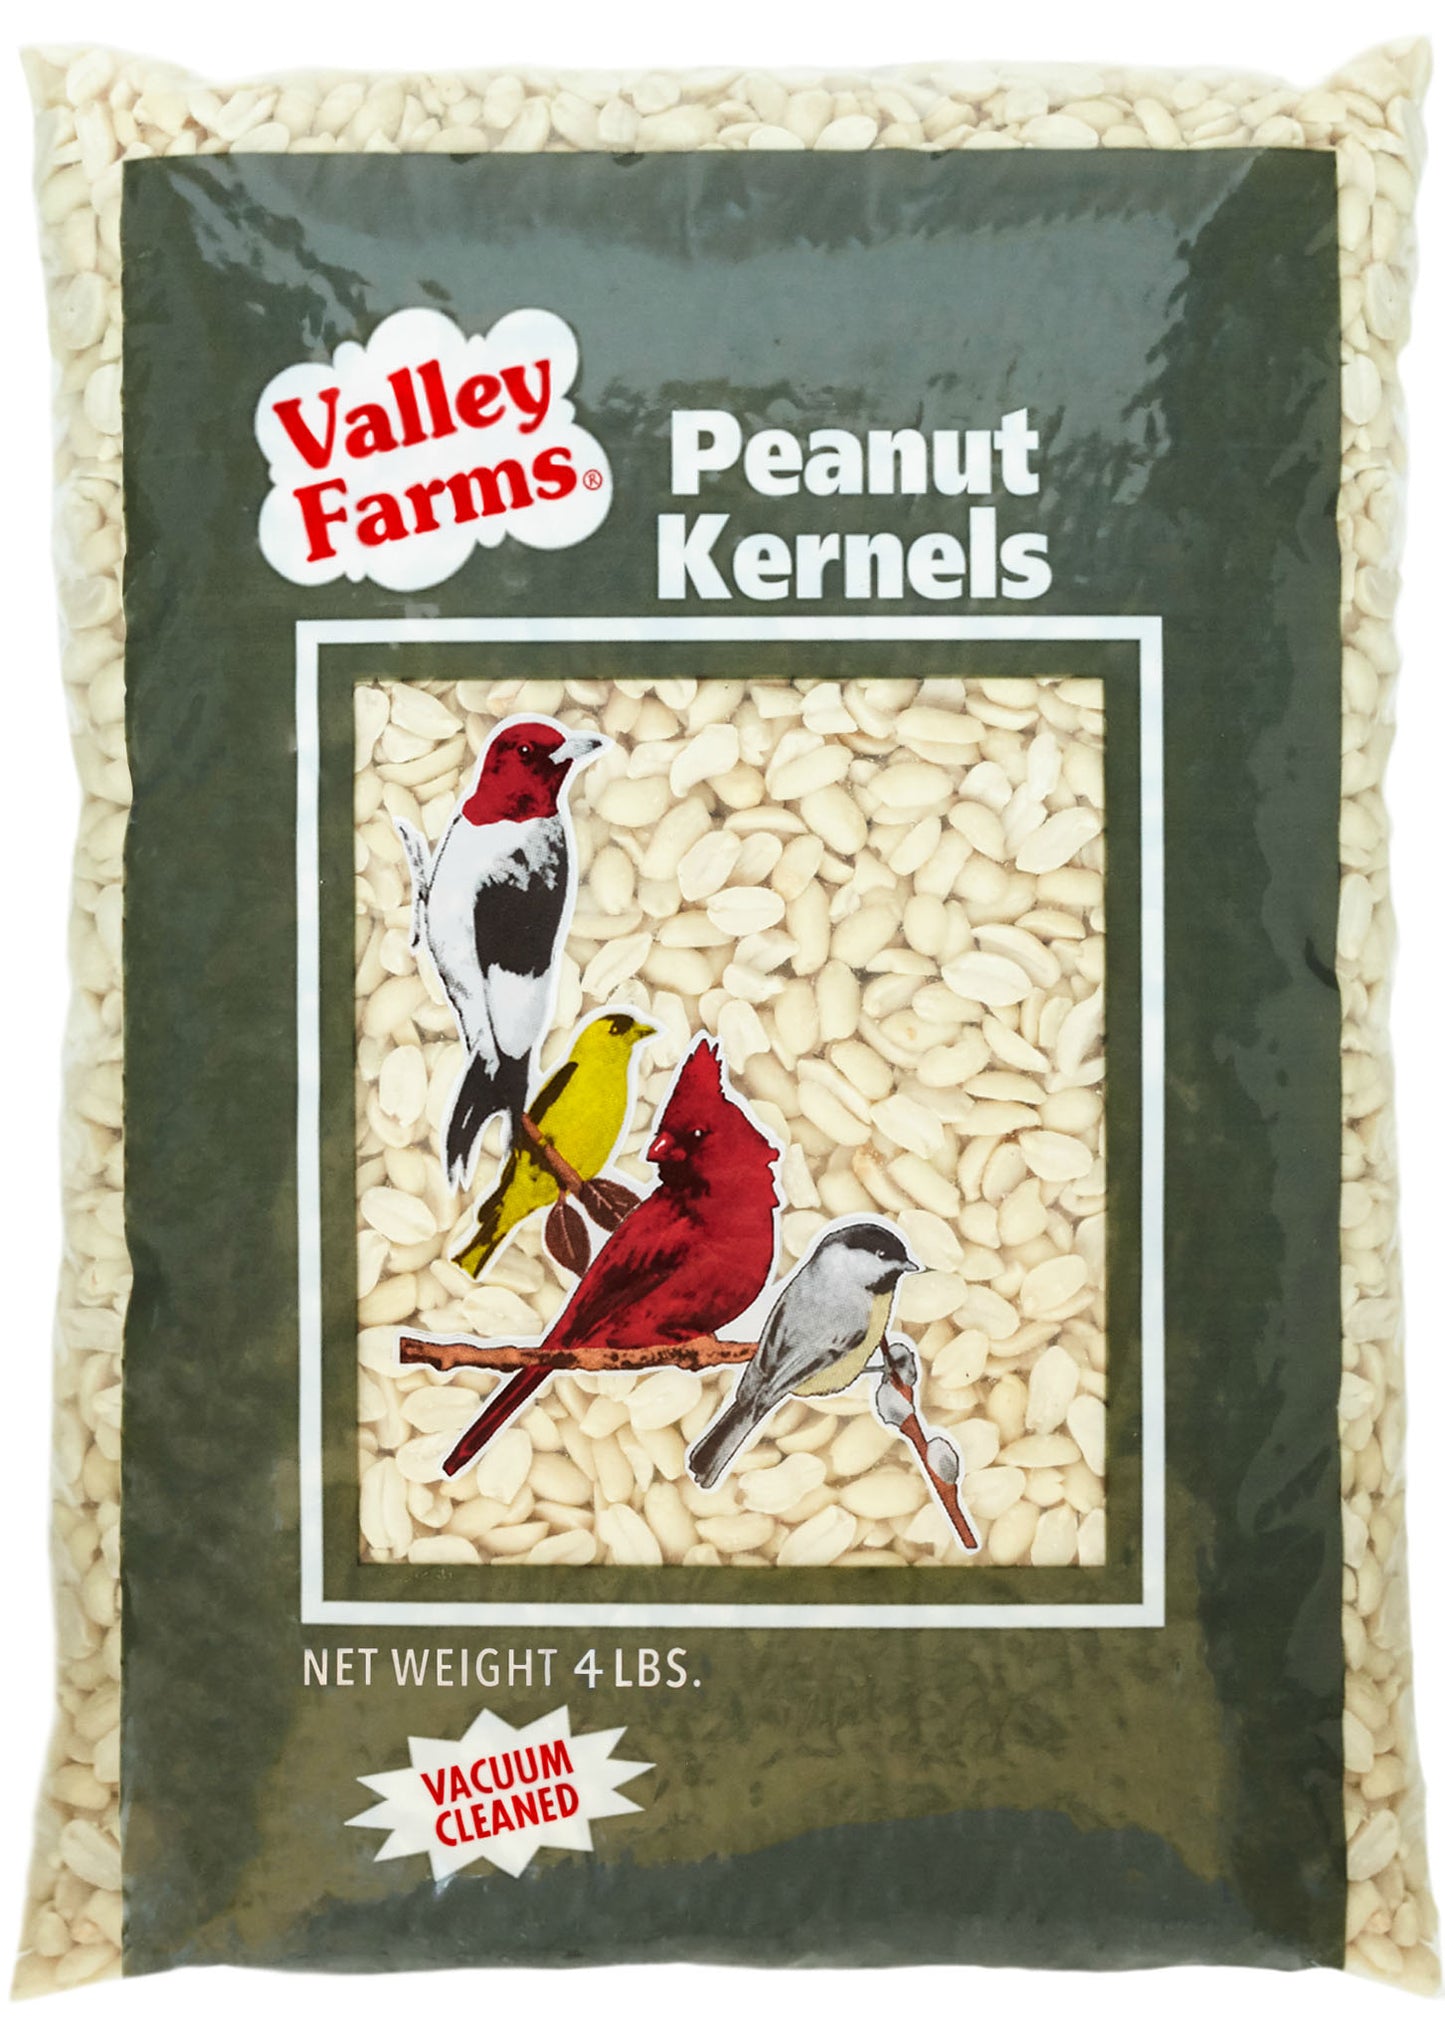 Valley Farms Peanut Kernels Wild Bird Food